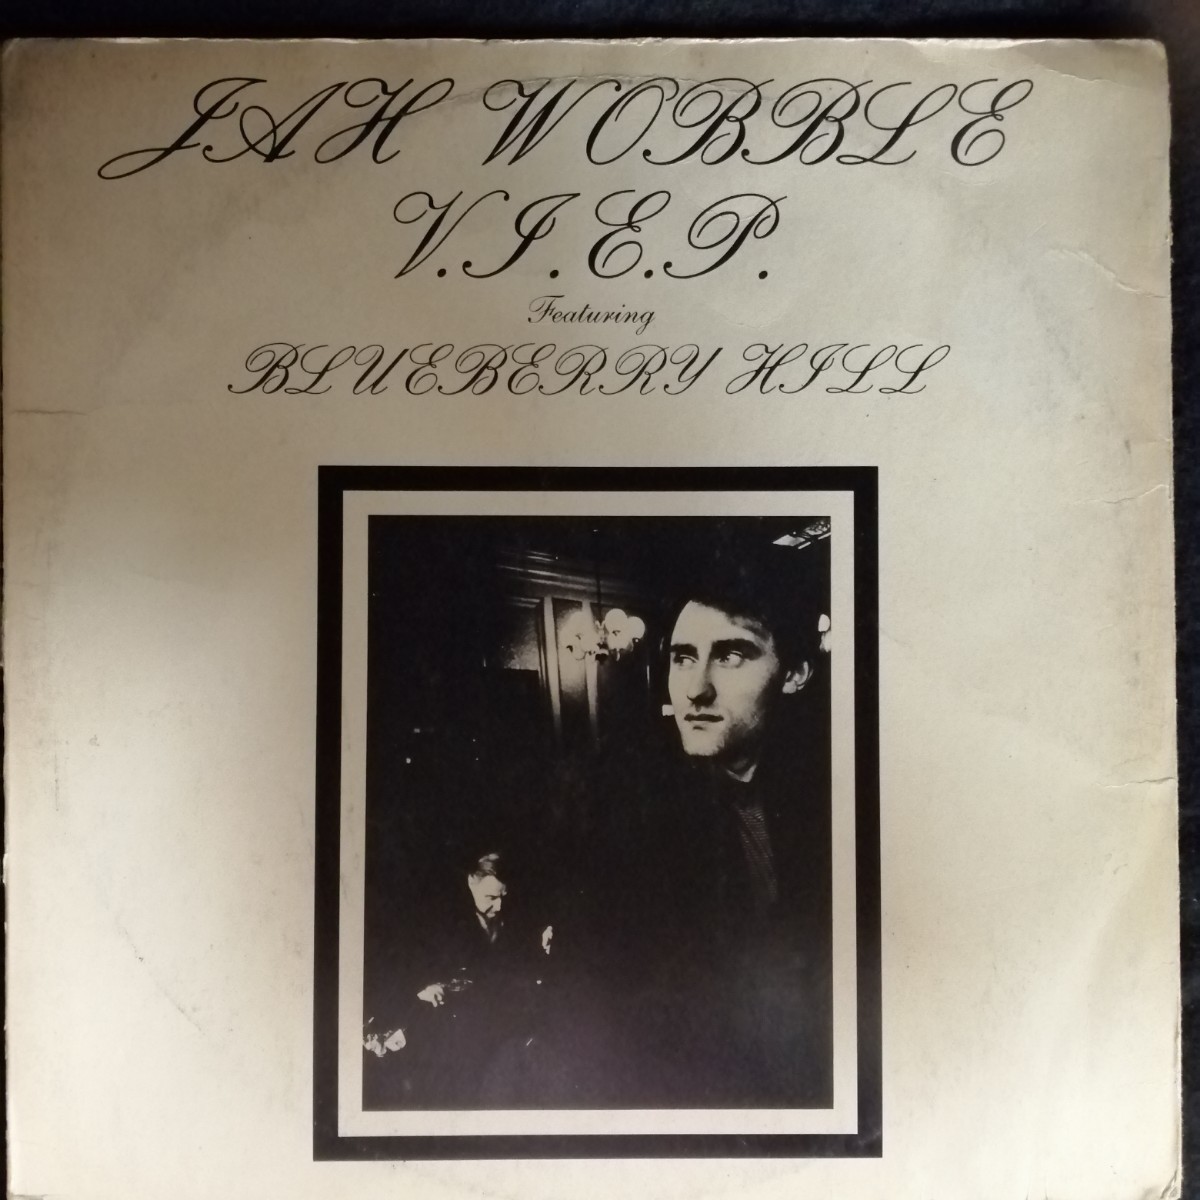 D02 中古LP 中古レコード　JAH WOBBLE vi.e.p. featuring blueberry hill UK盤　VS 361-12_画像1